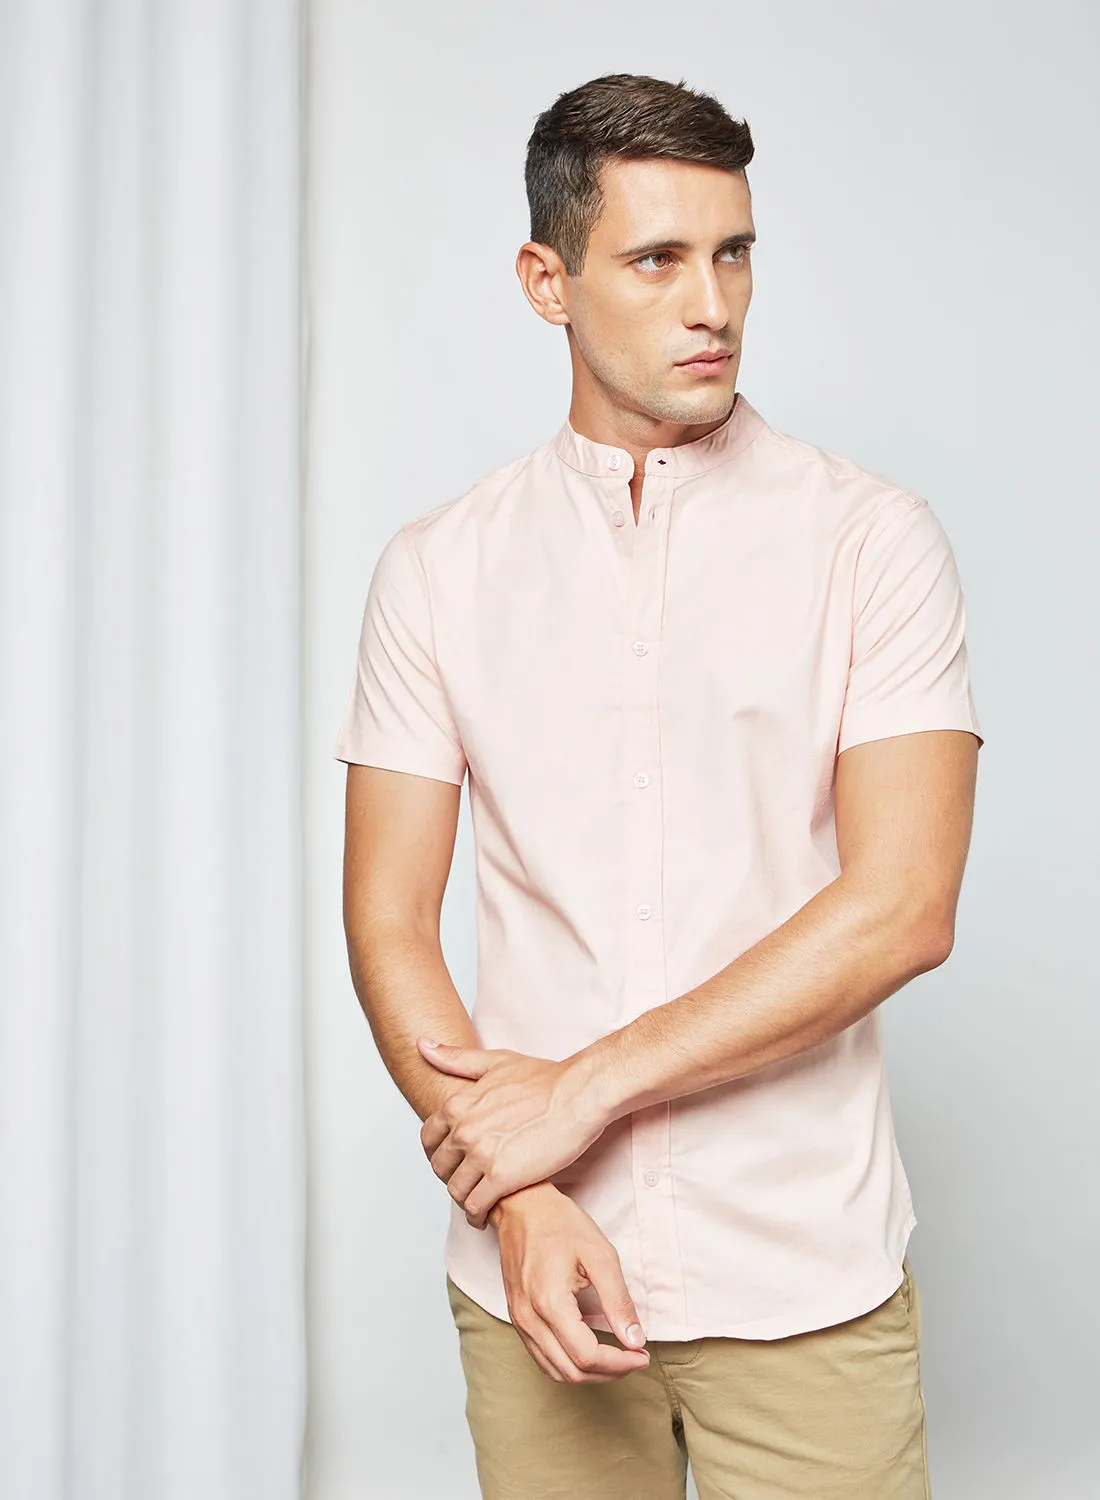 STATE 8 Mandarin Collar Shirt Light Pink